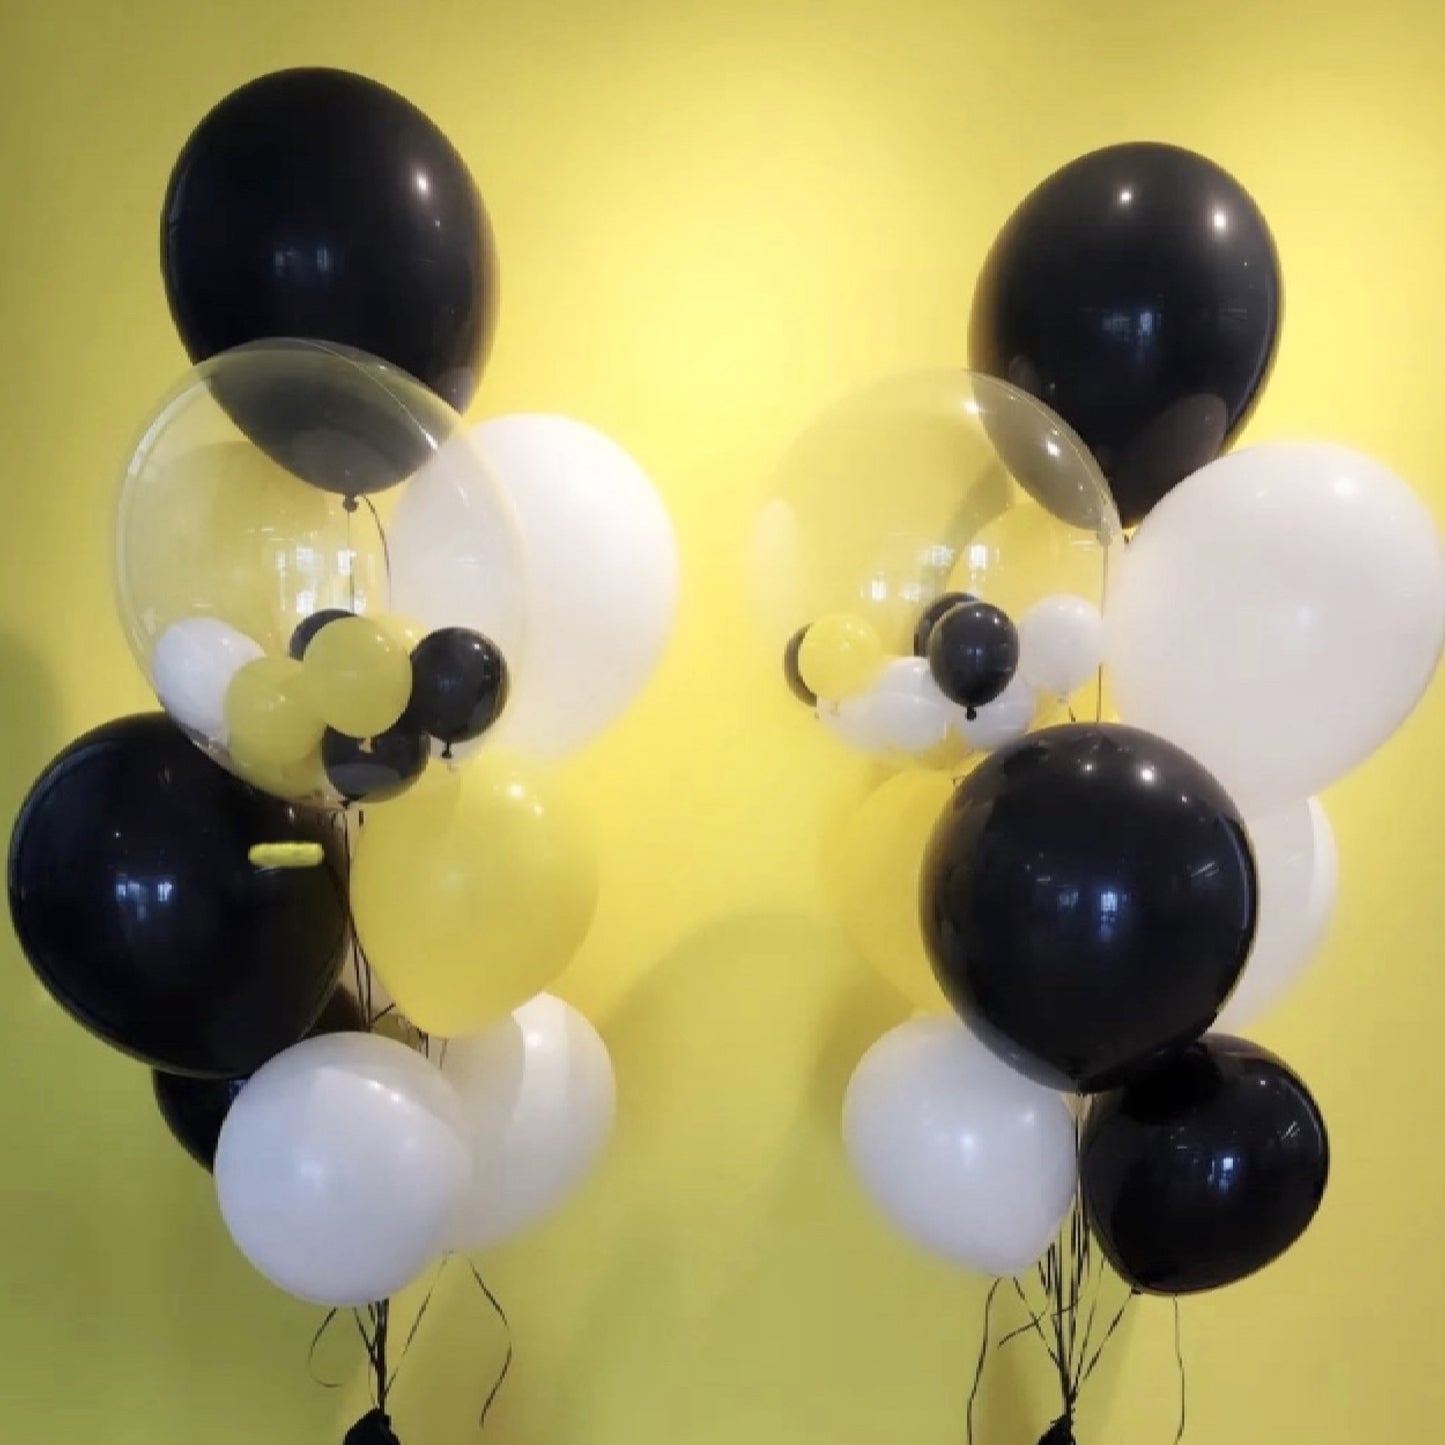 16 inch Yellow latex balloon helium filled